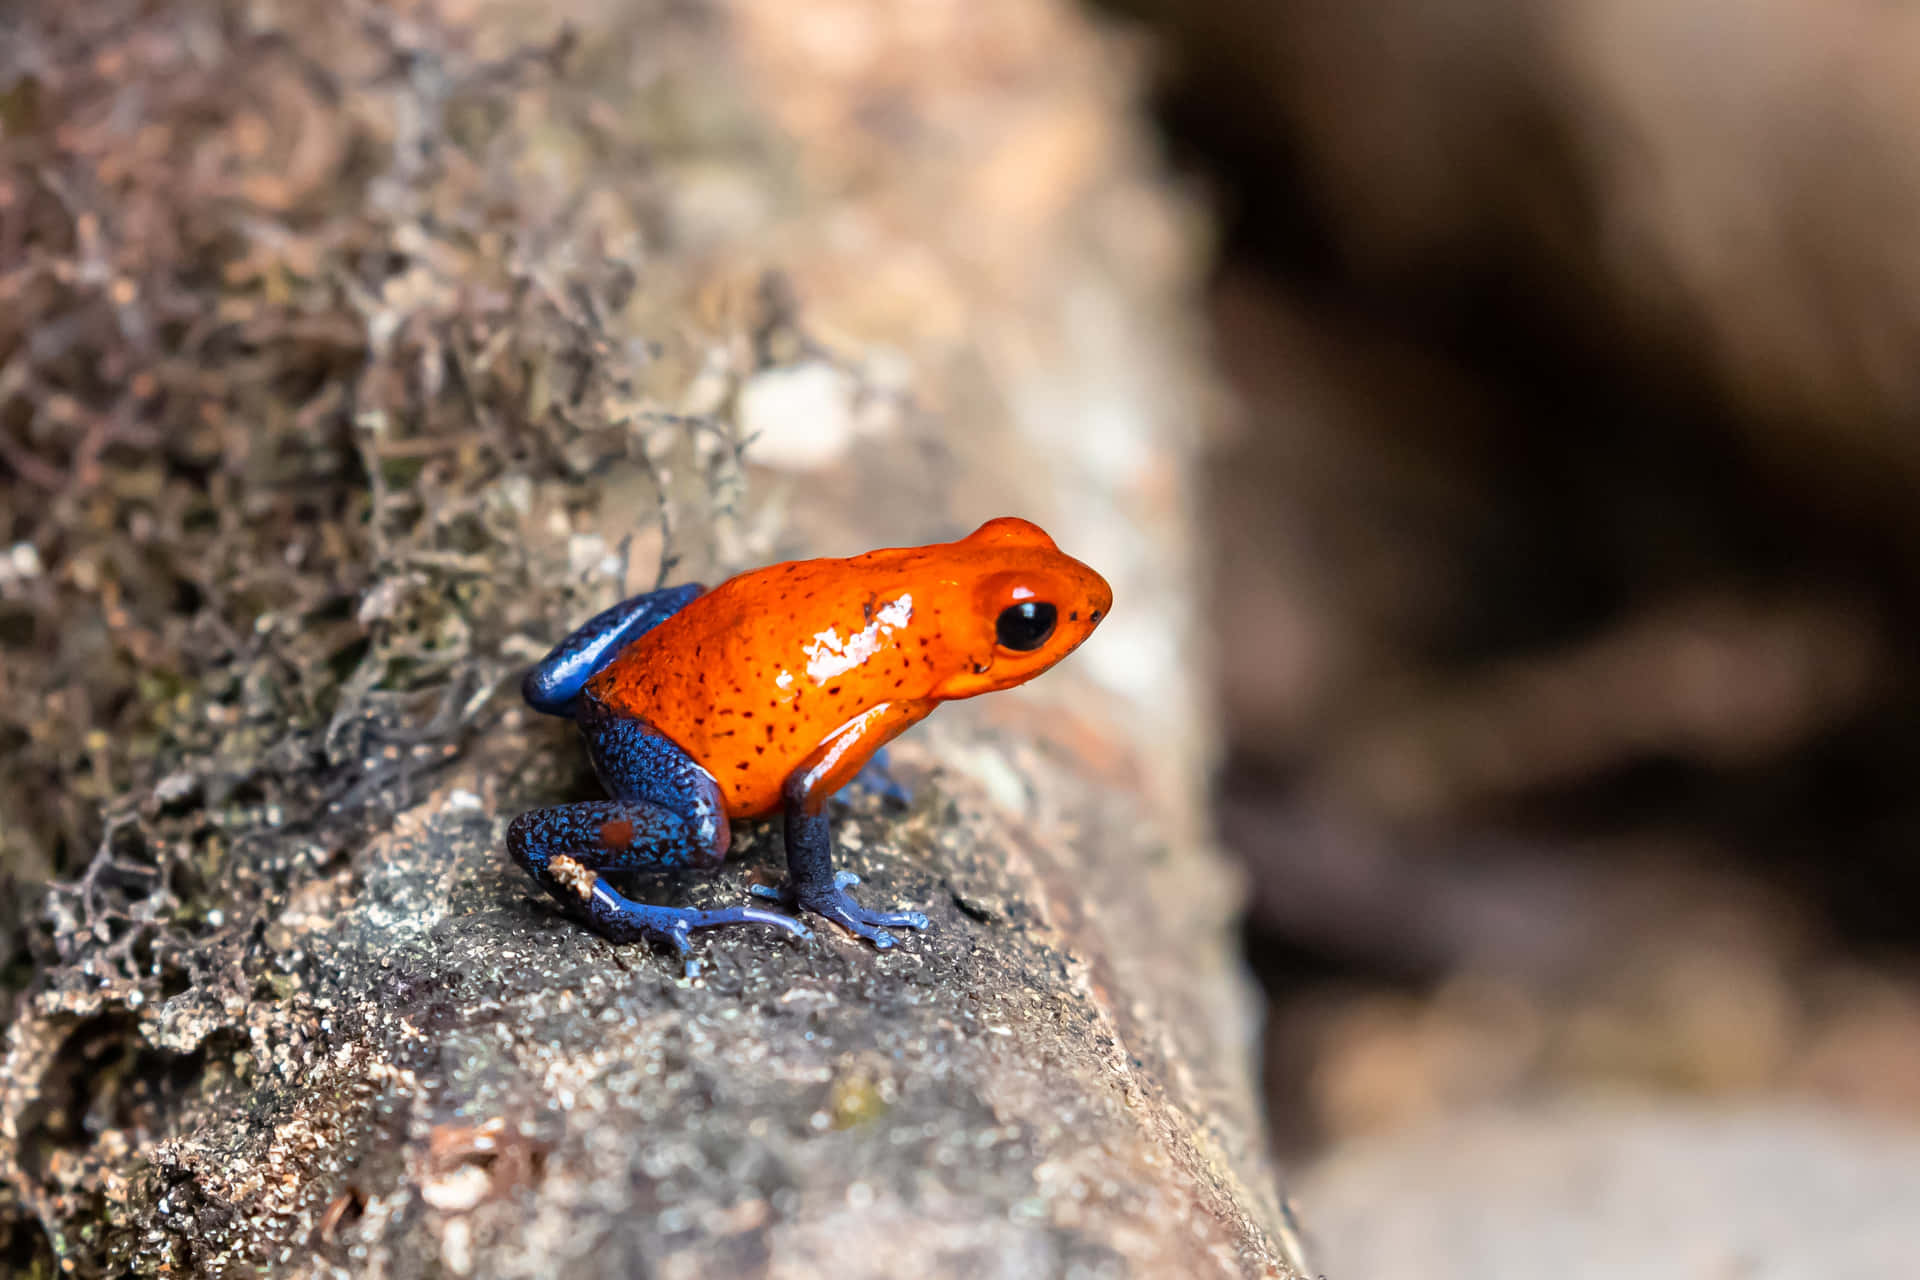 A vibrant frog perched atop a leaf